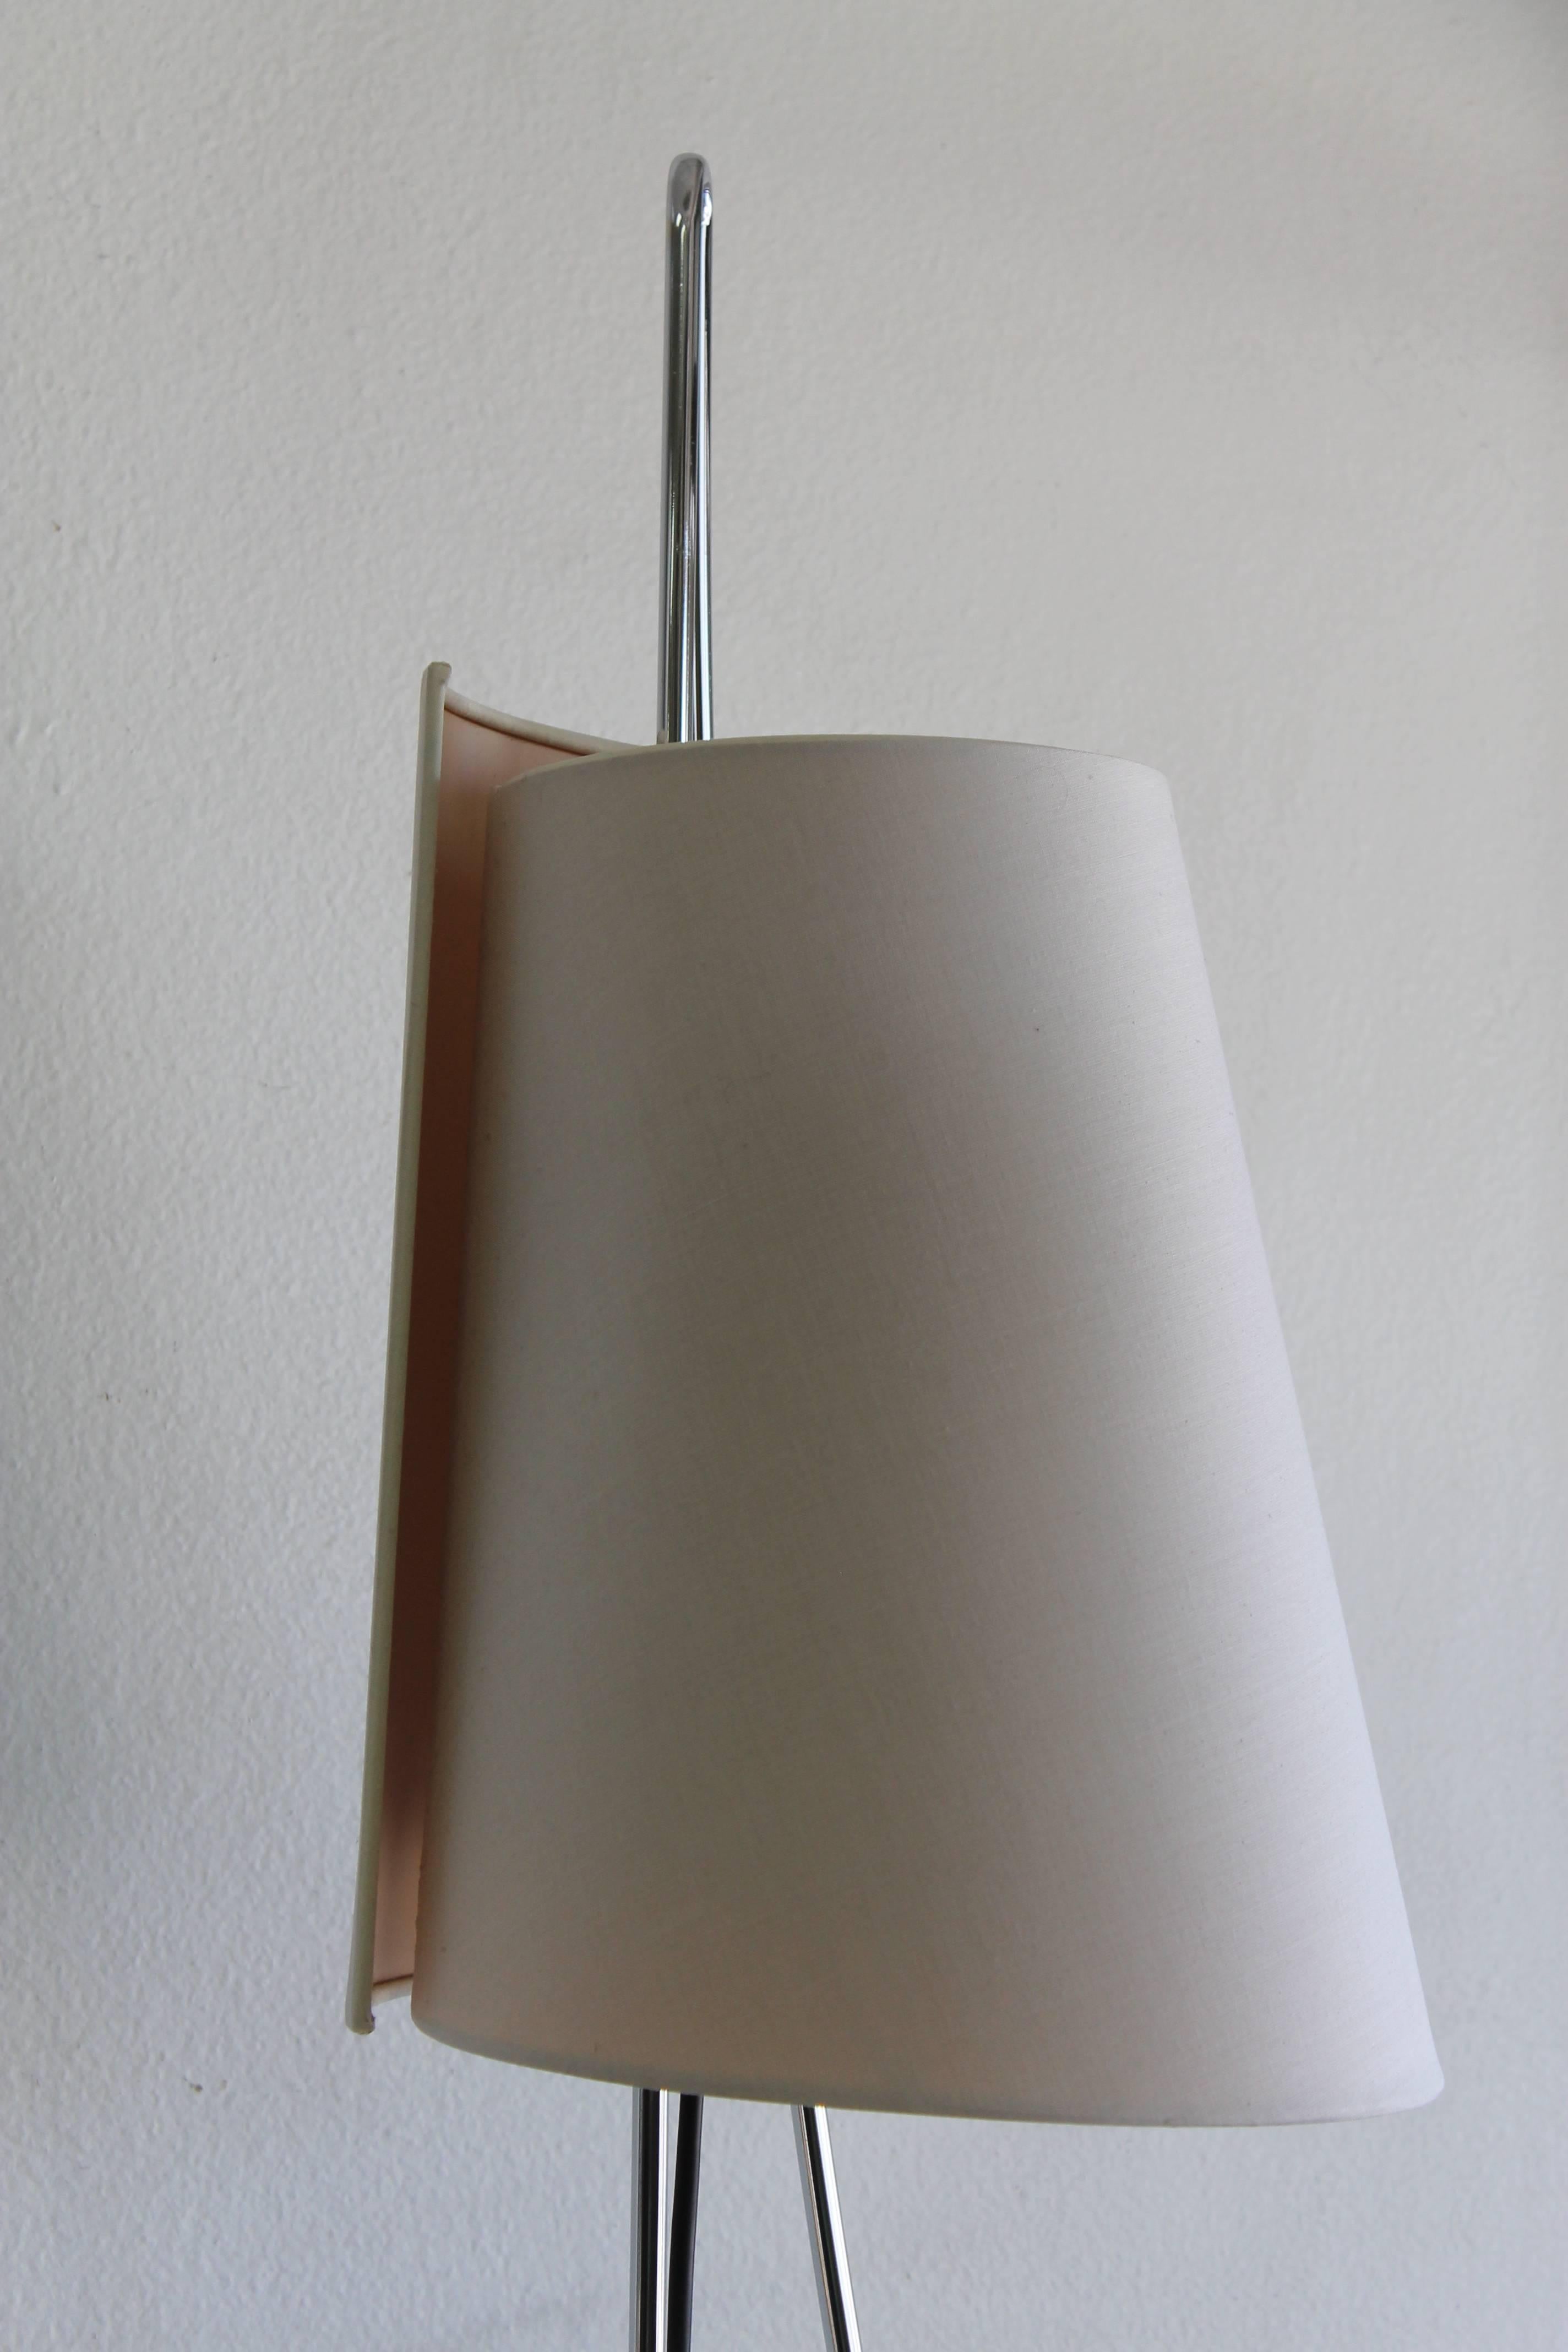 Sculptural Italiana Luce floor lamp. One continuous chrome 